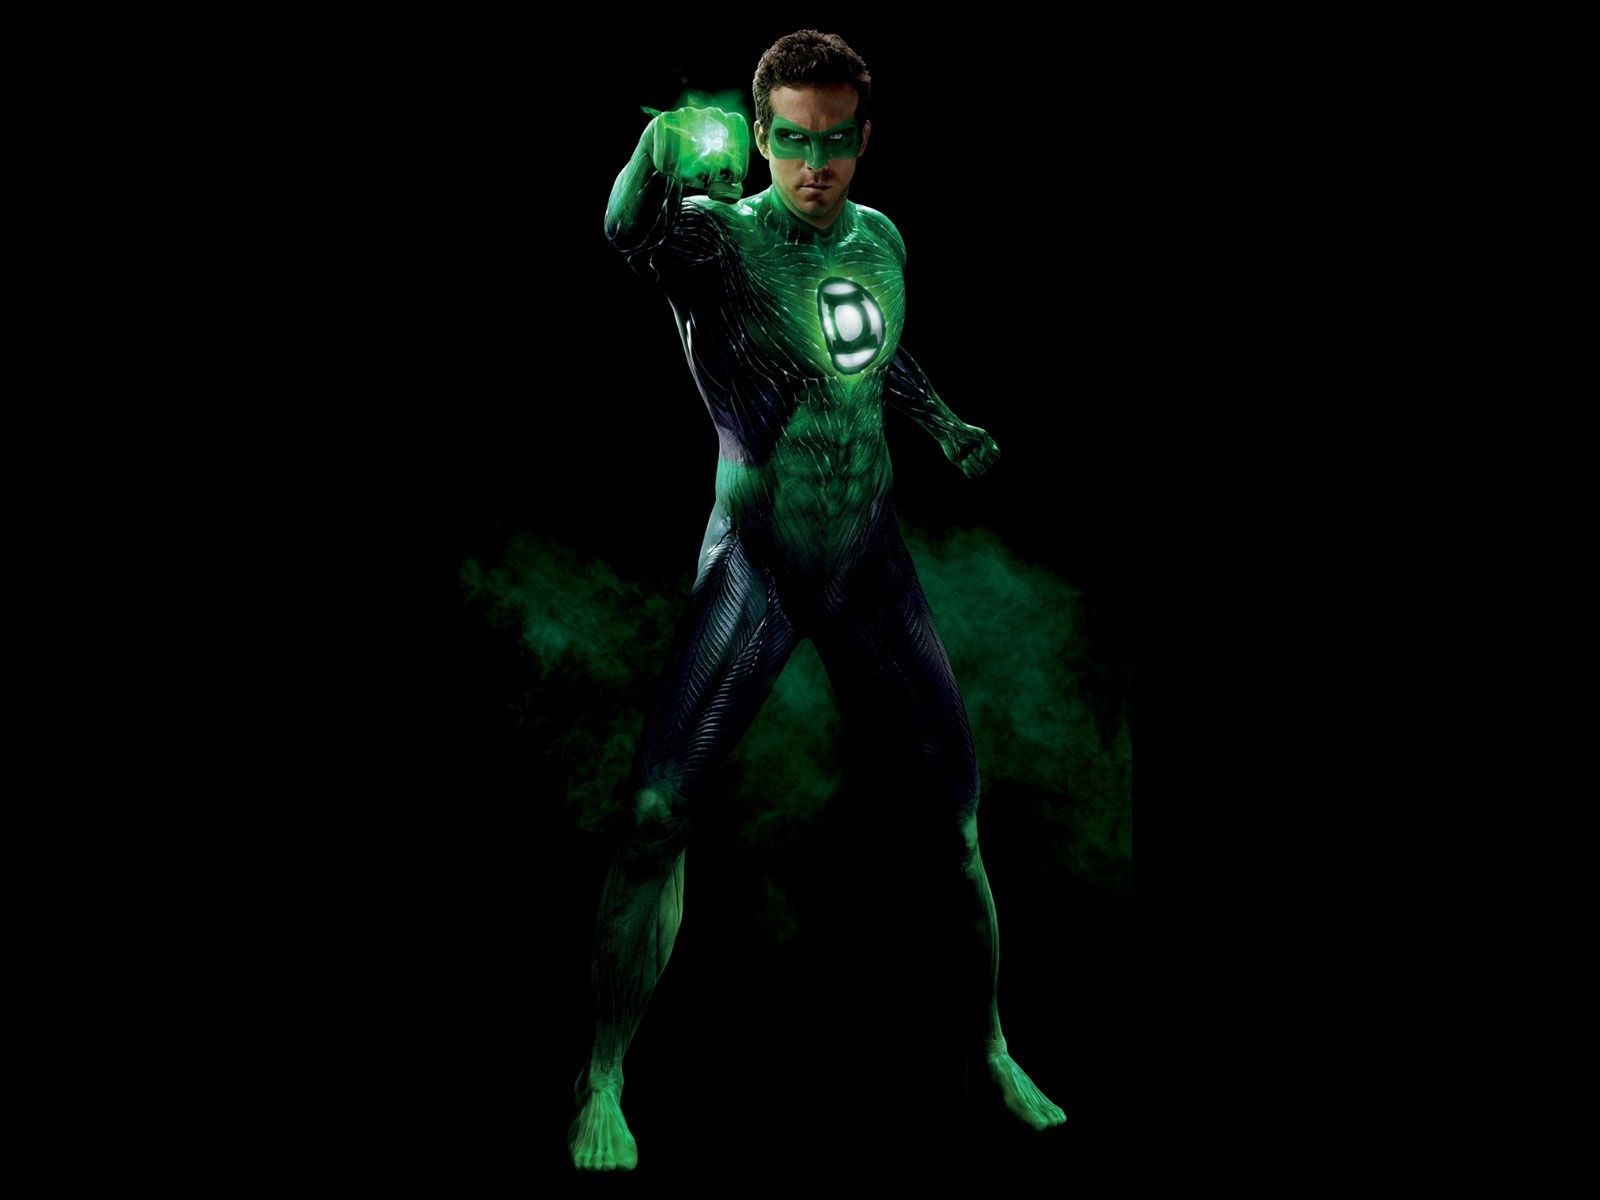 scrumptious: Super 8 & Green Lantern